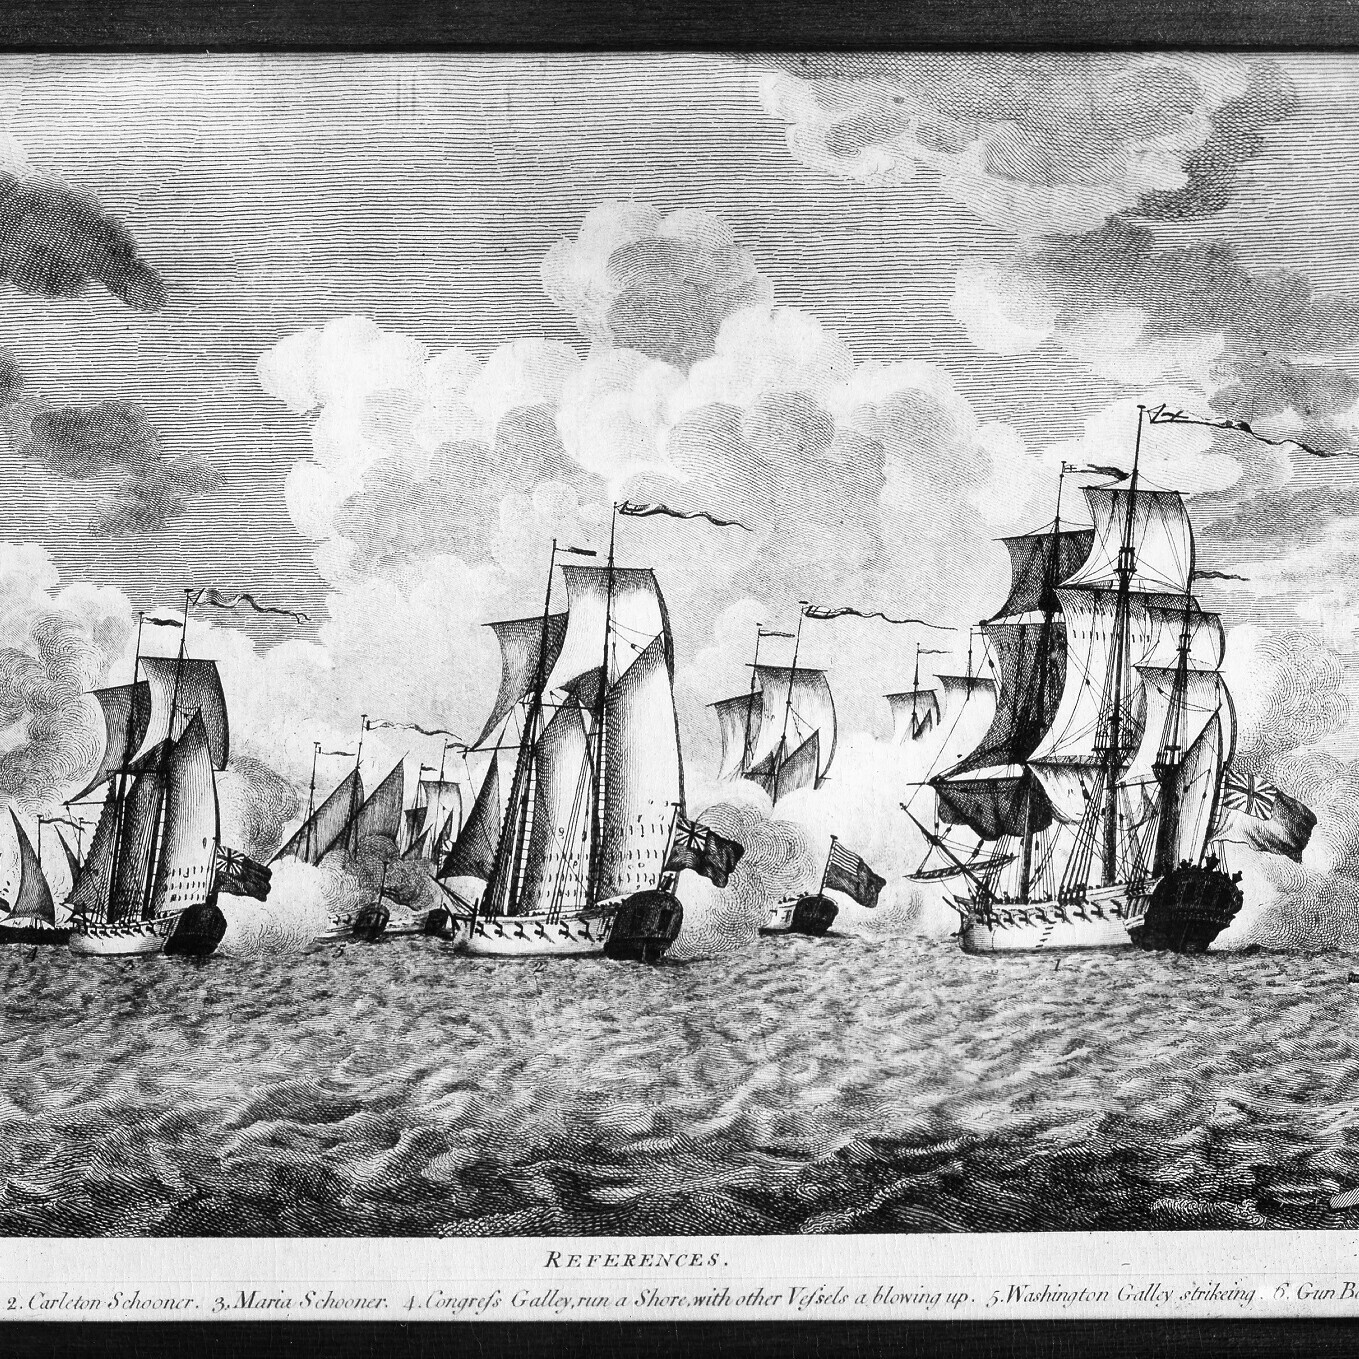 Illustration of 3 sailing ships in battle